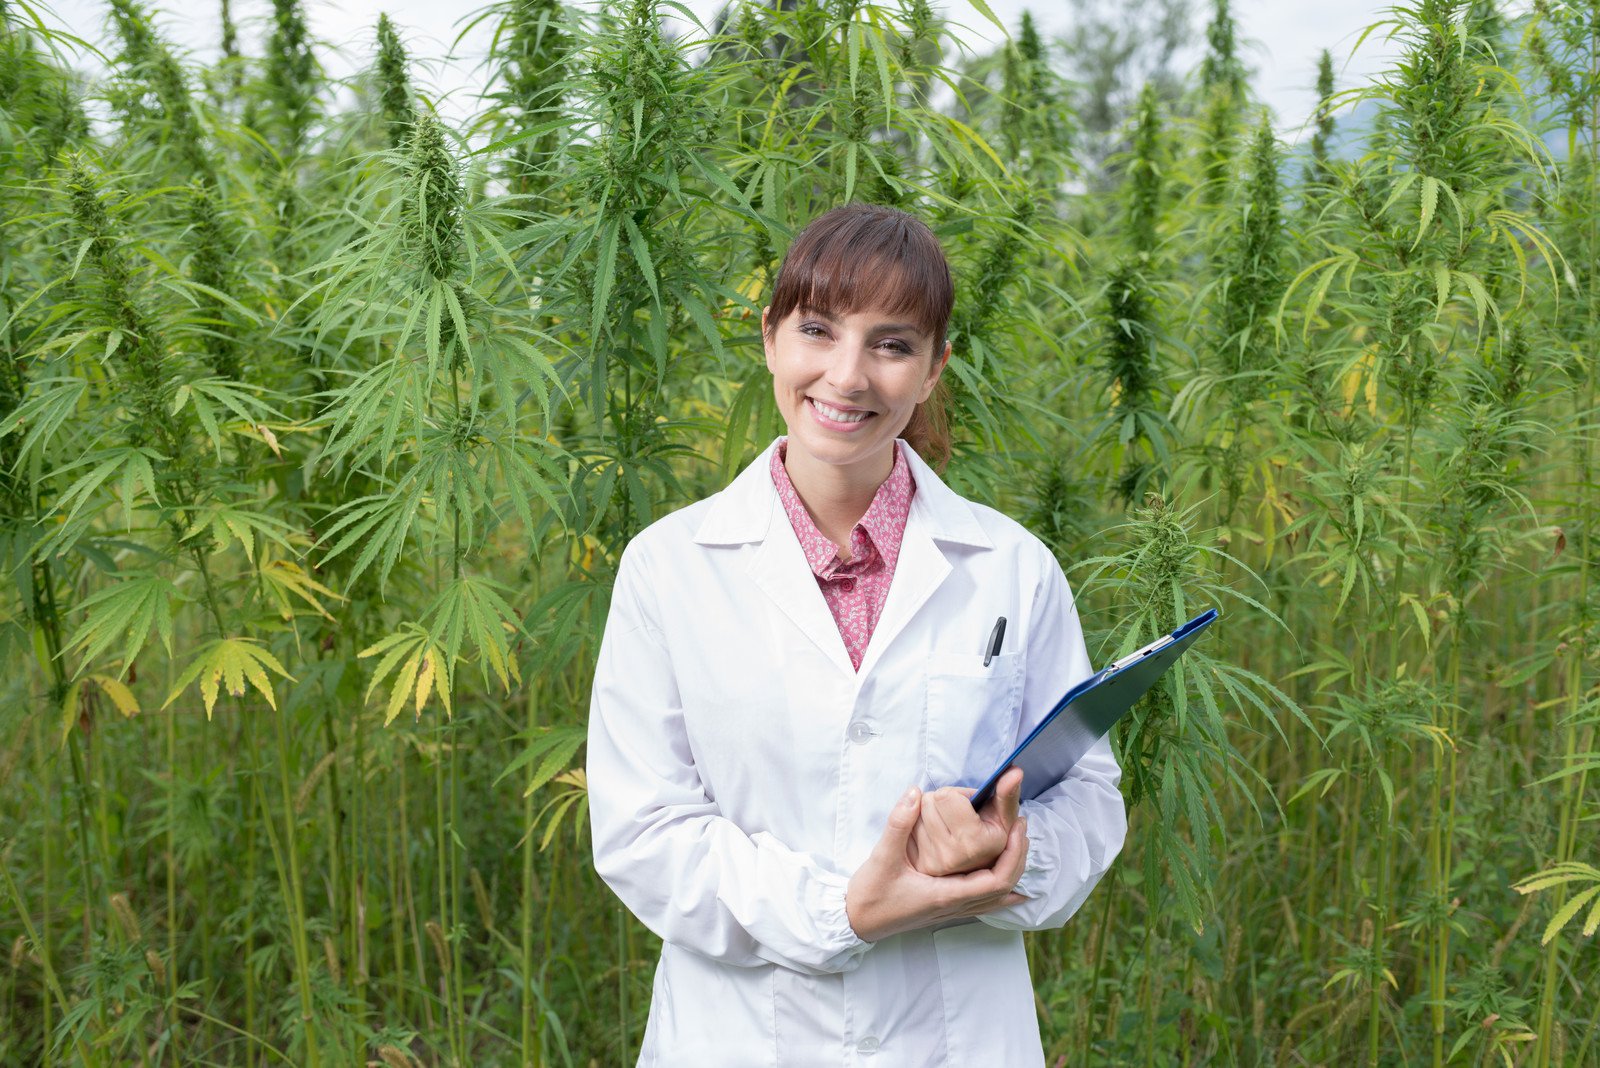 Pot doc standing in front of a field of marijuana plants.